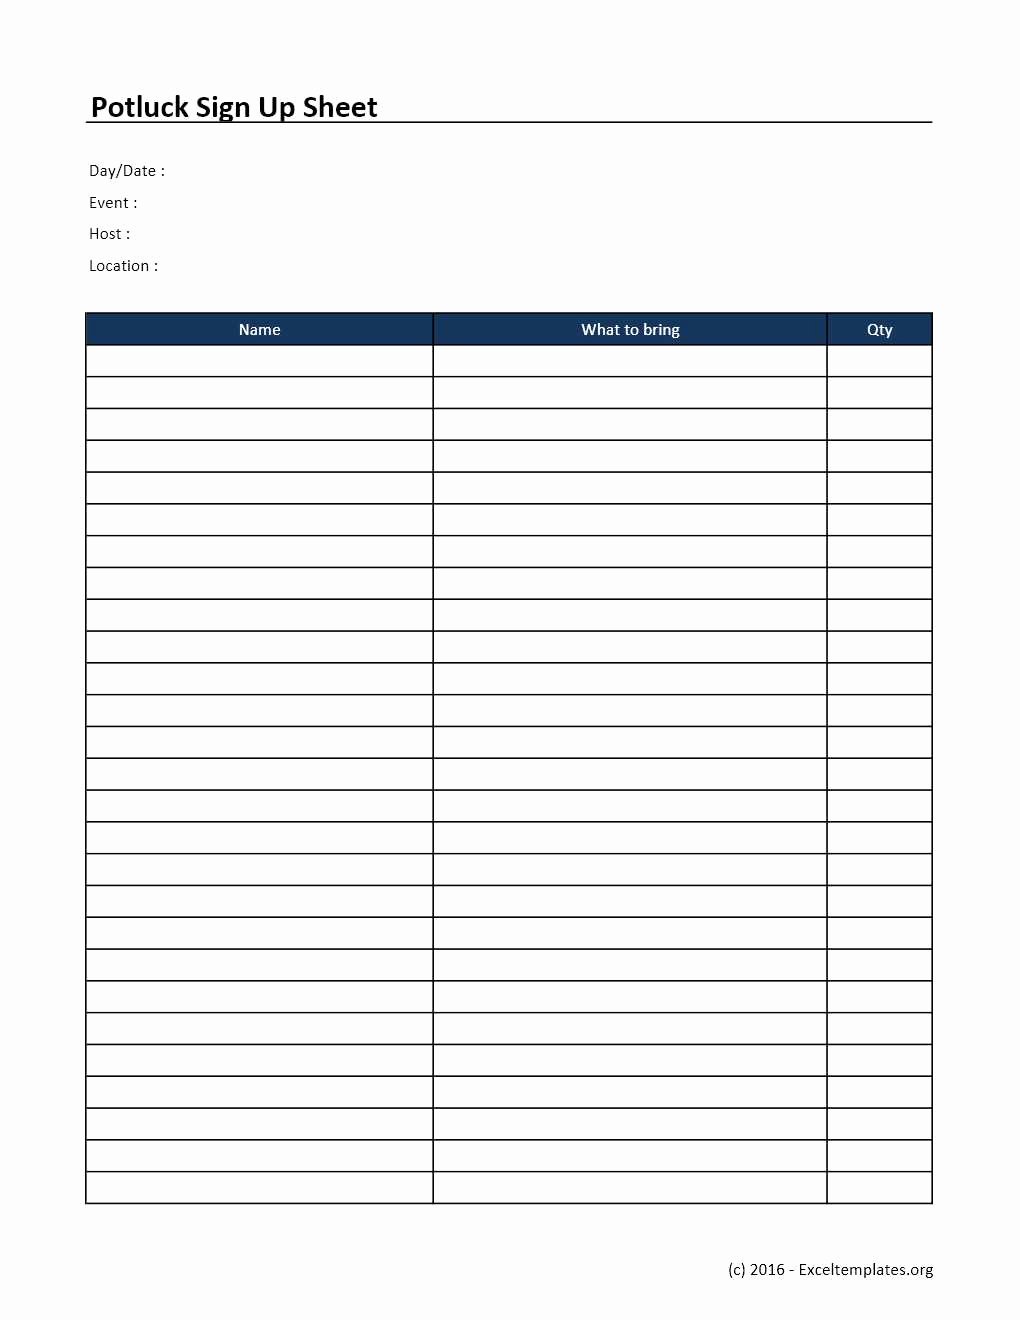 Sign Up Sheets Template Elegant Potluck Sign Up Sheet Template Excel Templates